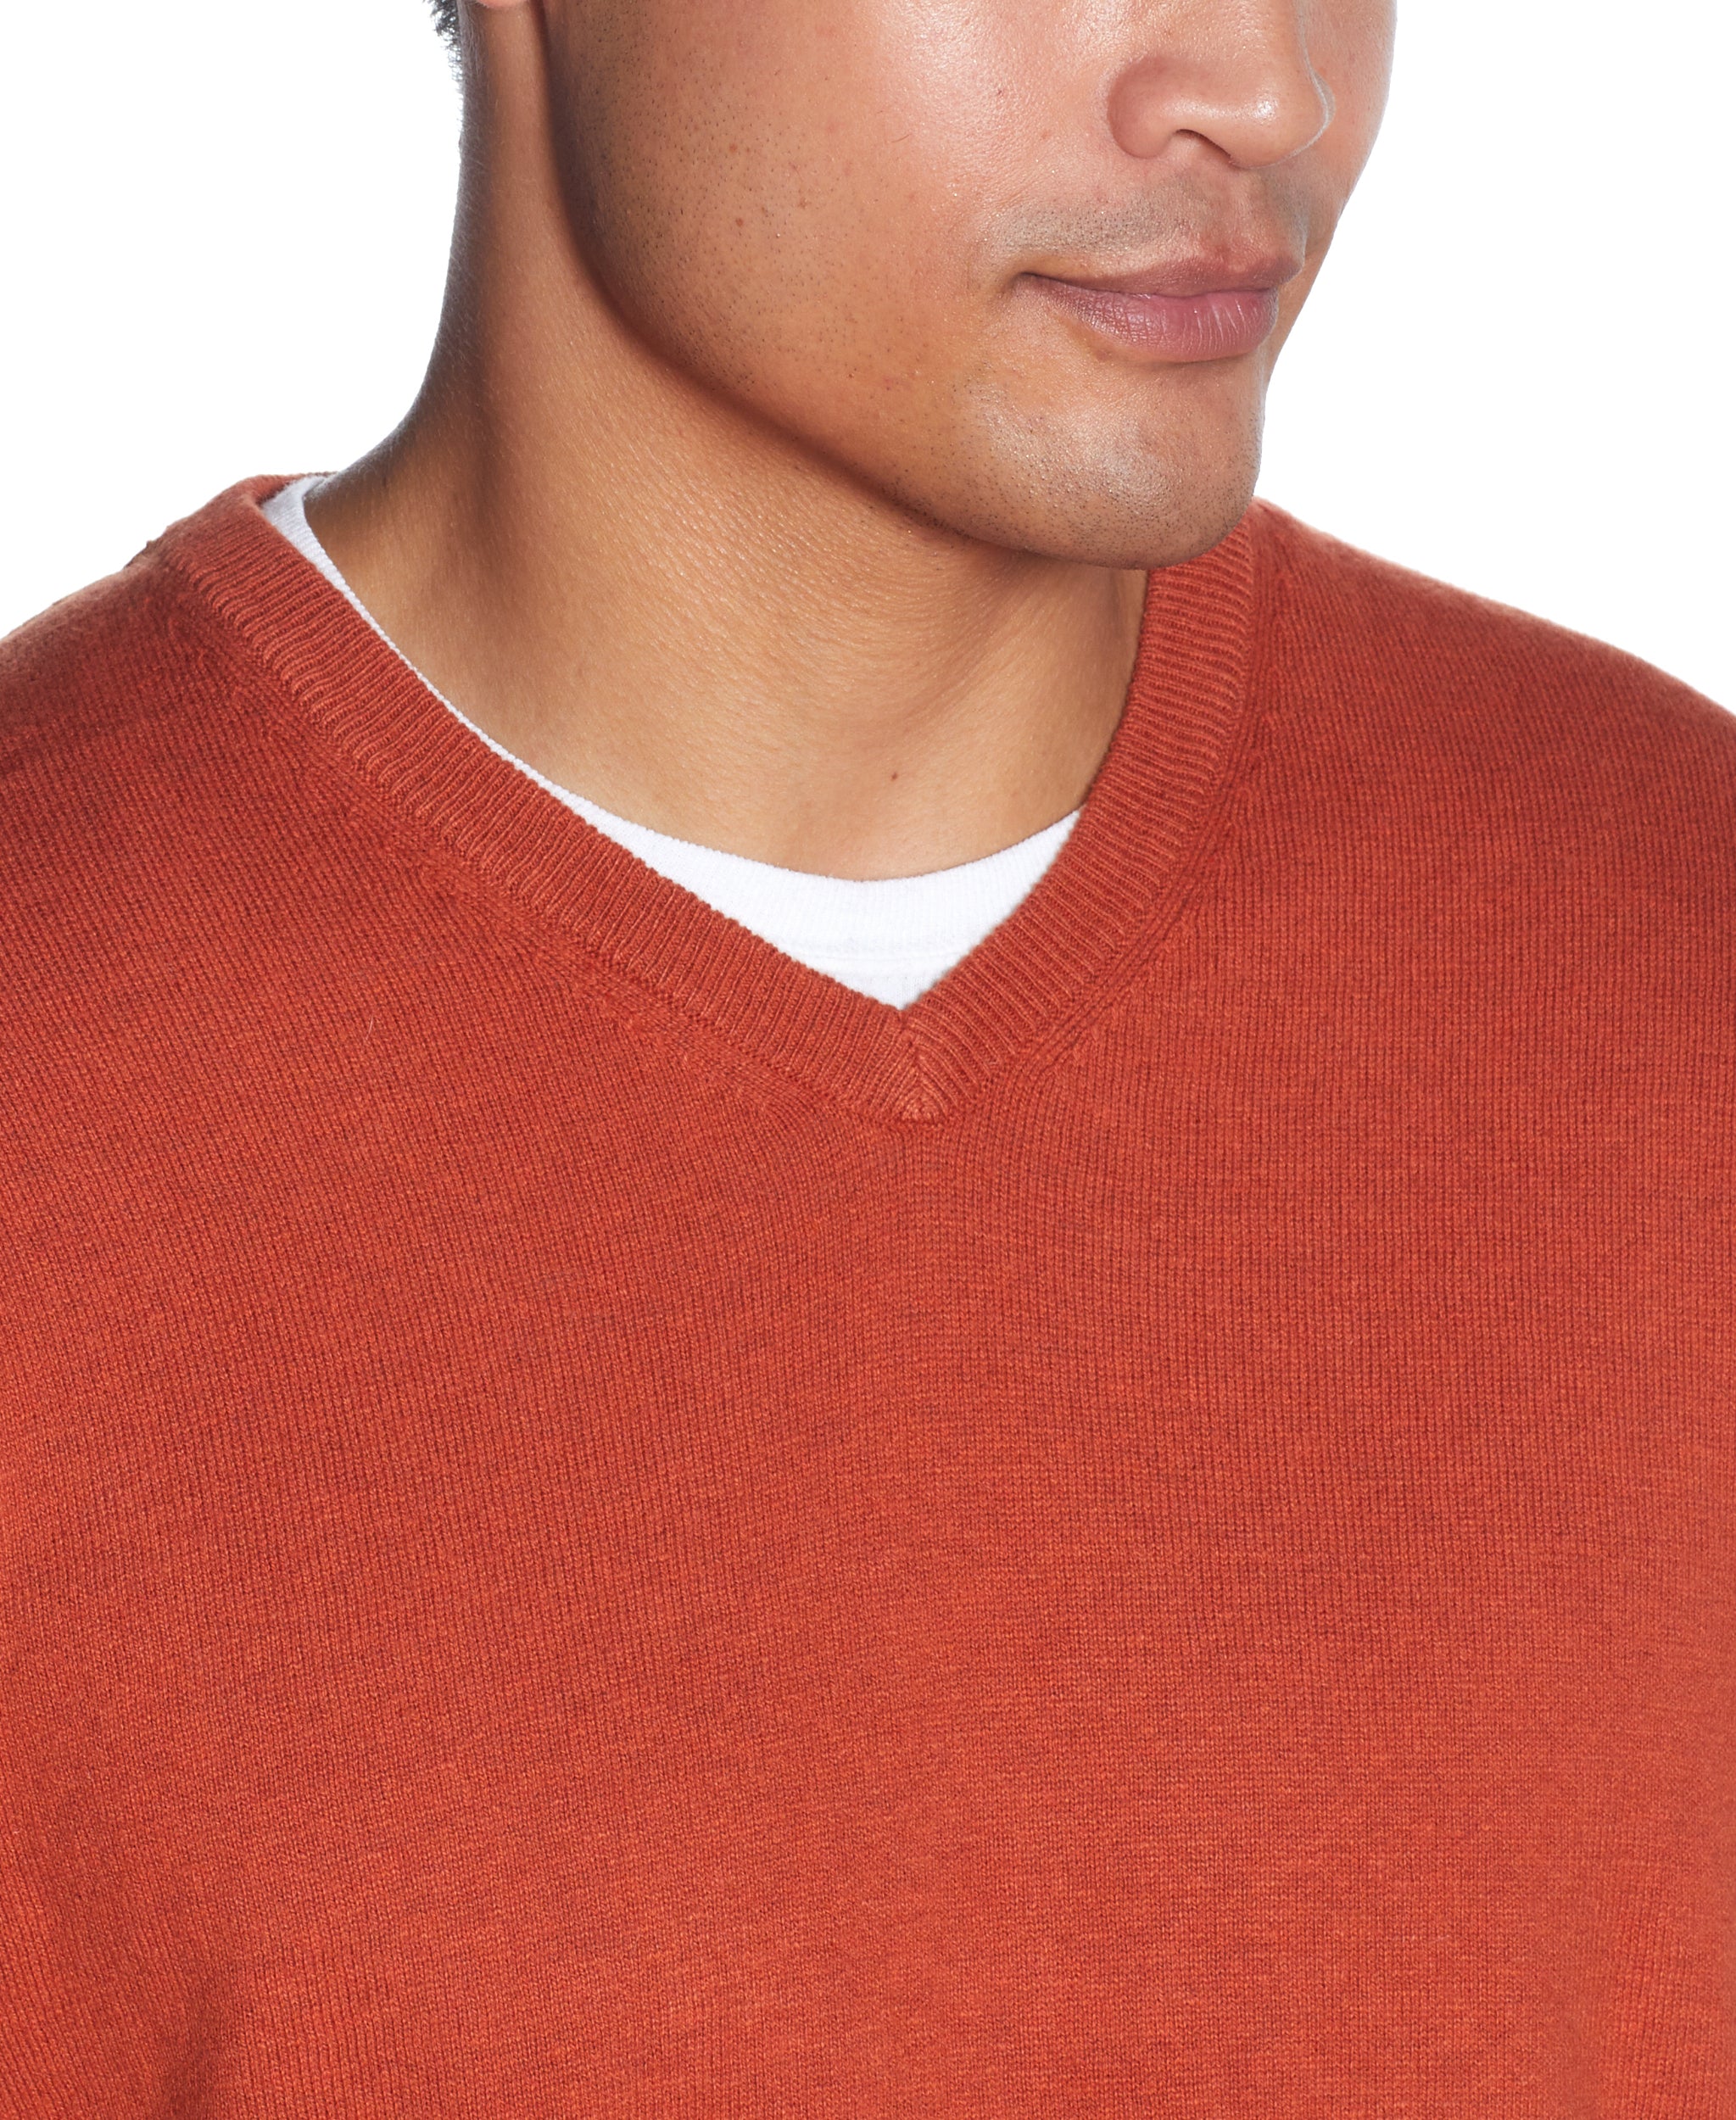 Cotton Cashmere V Neck Sweater in Color Pumpkin